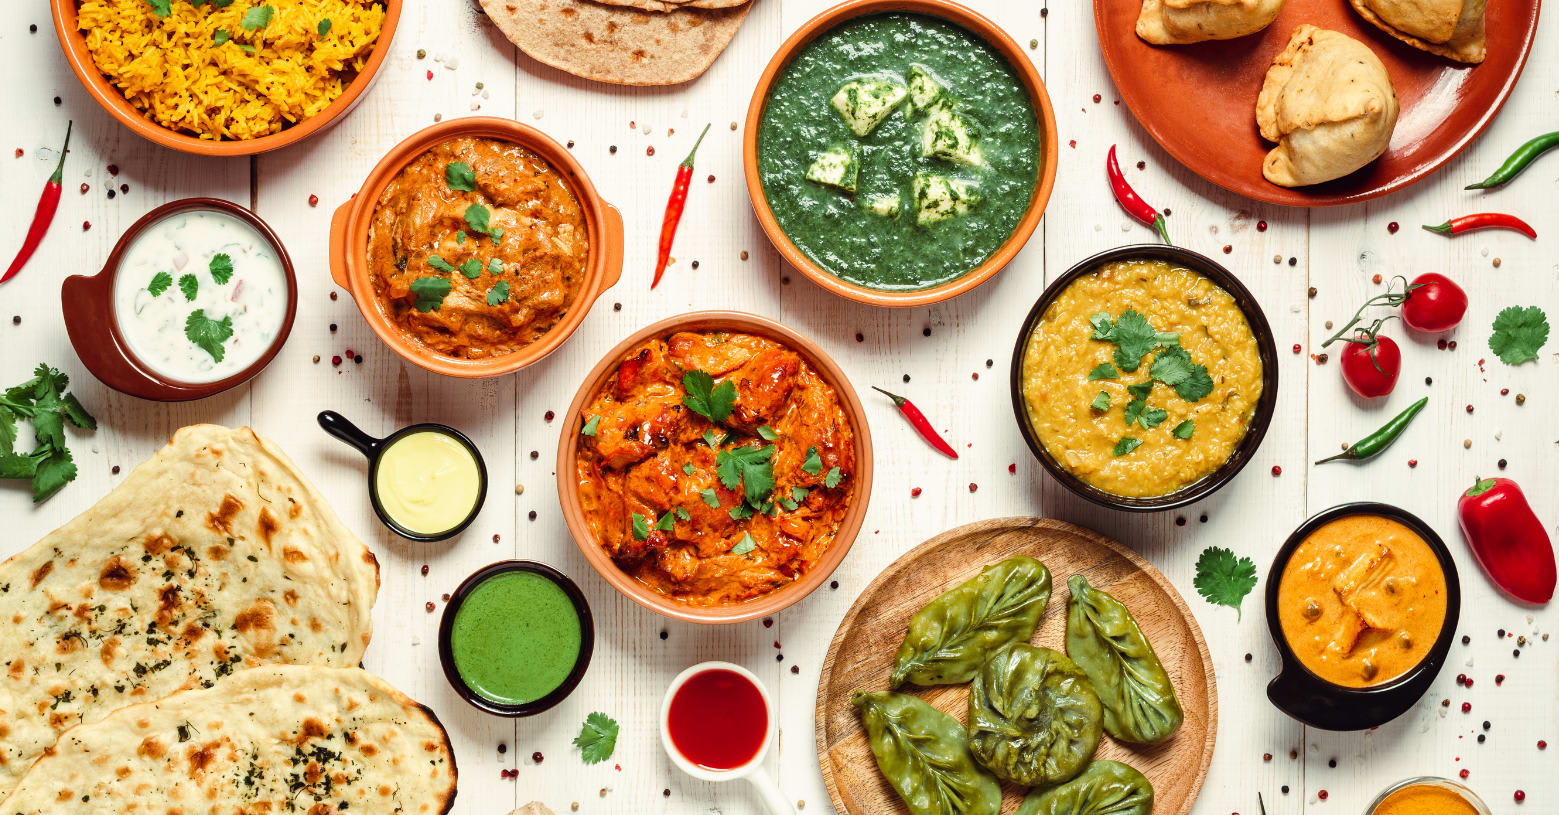 Baburchi Indian Cuisine | Indian Restaurant & Takeaway in Gloucester